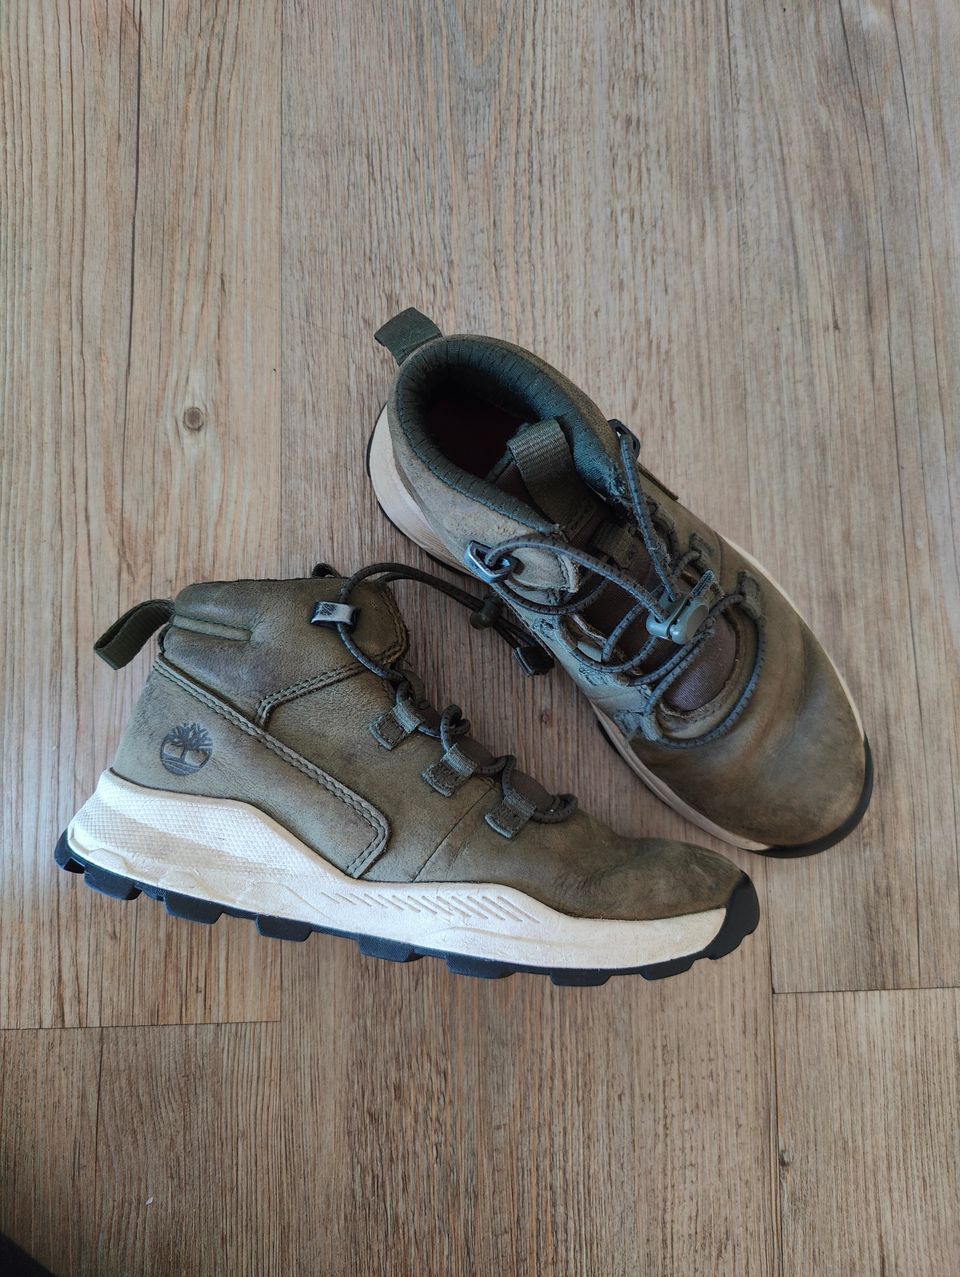 Timberland kengät